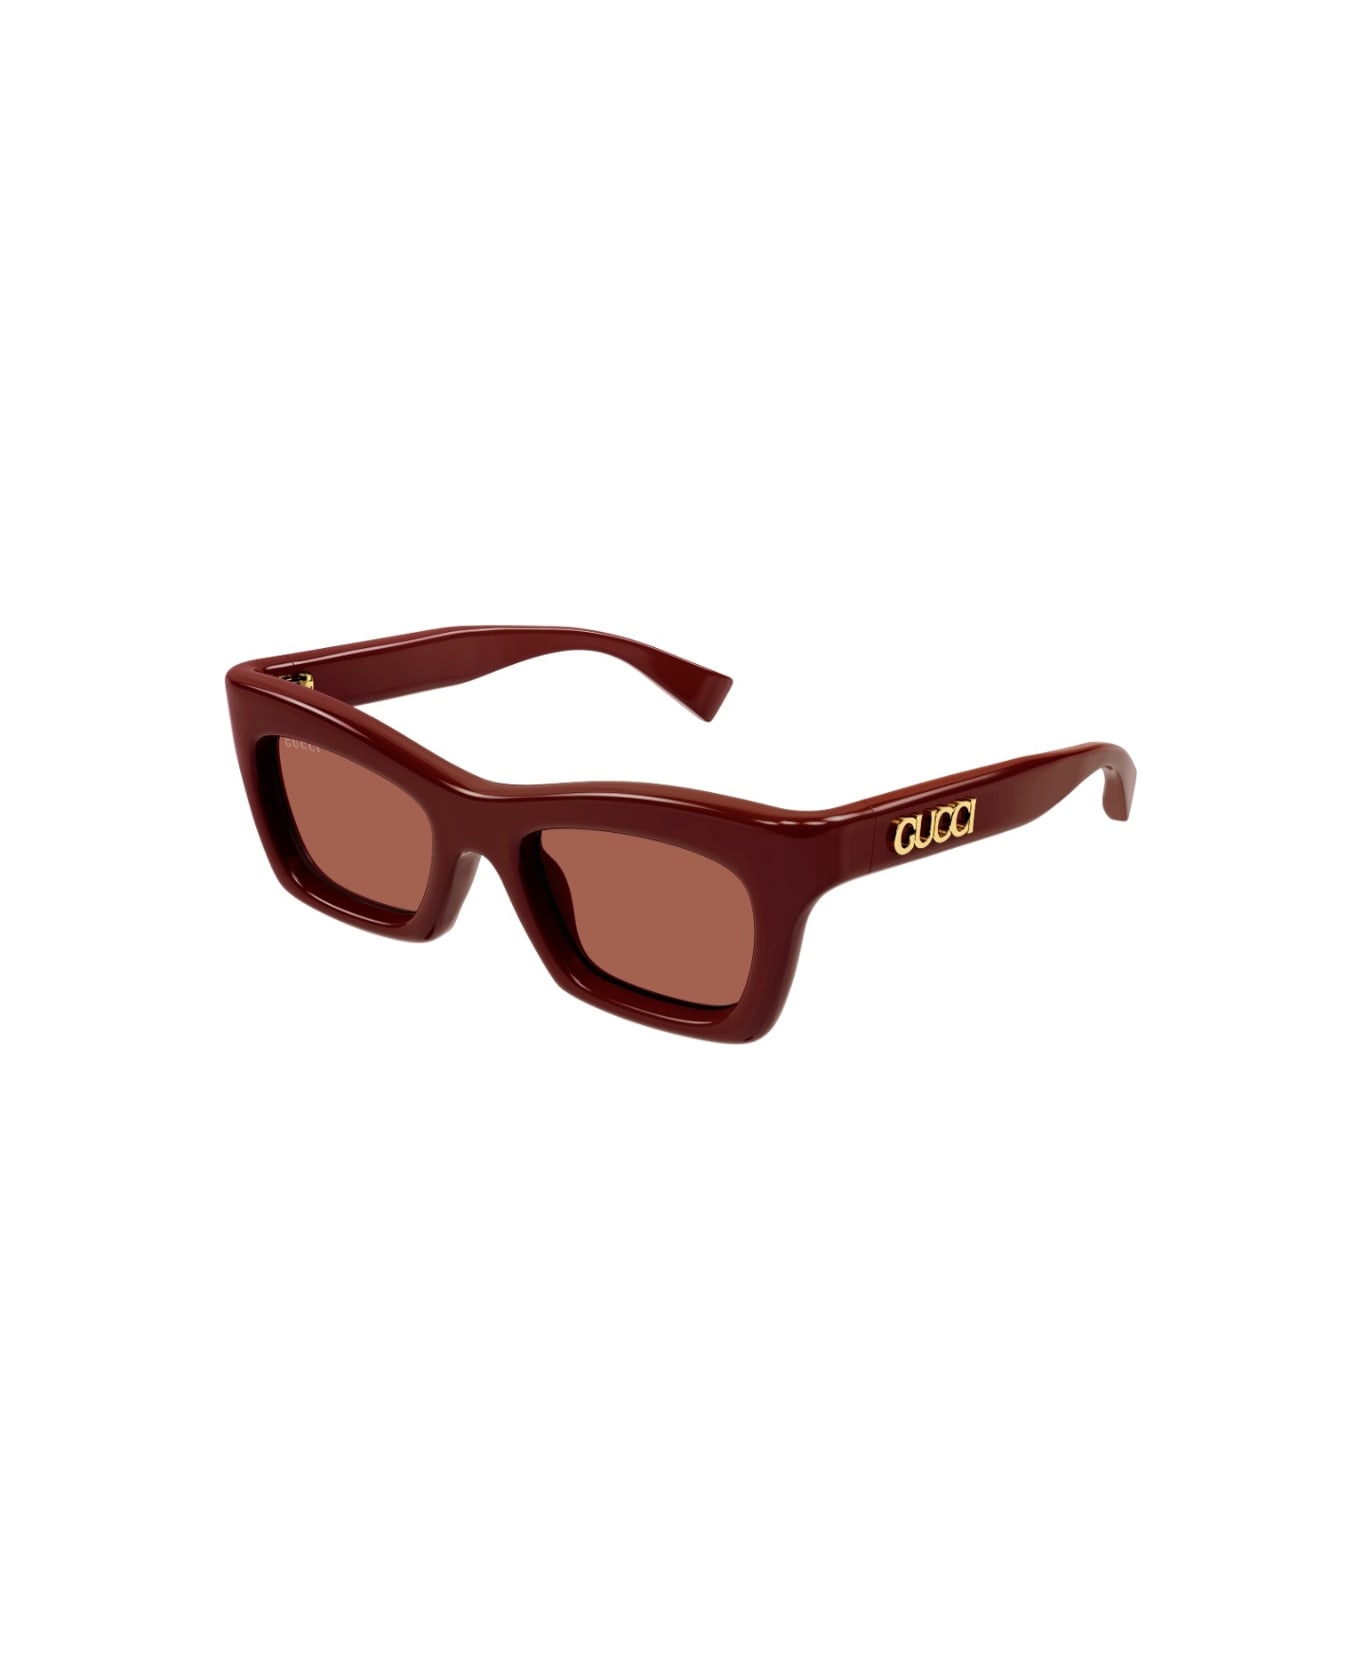 Gucci Eyewear GG1773s 003 Sunglasses